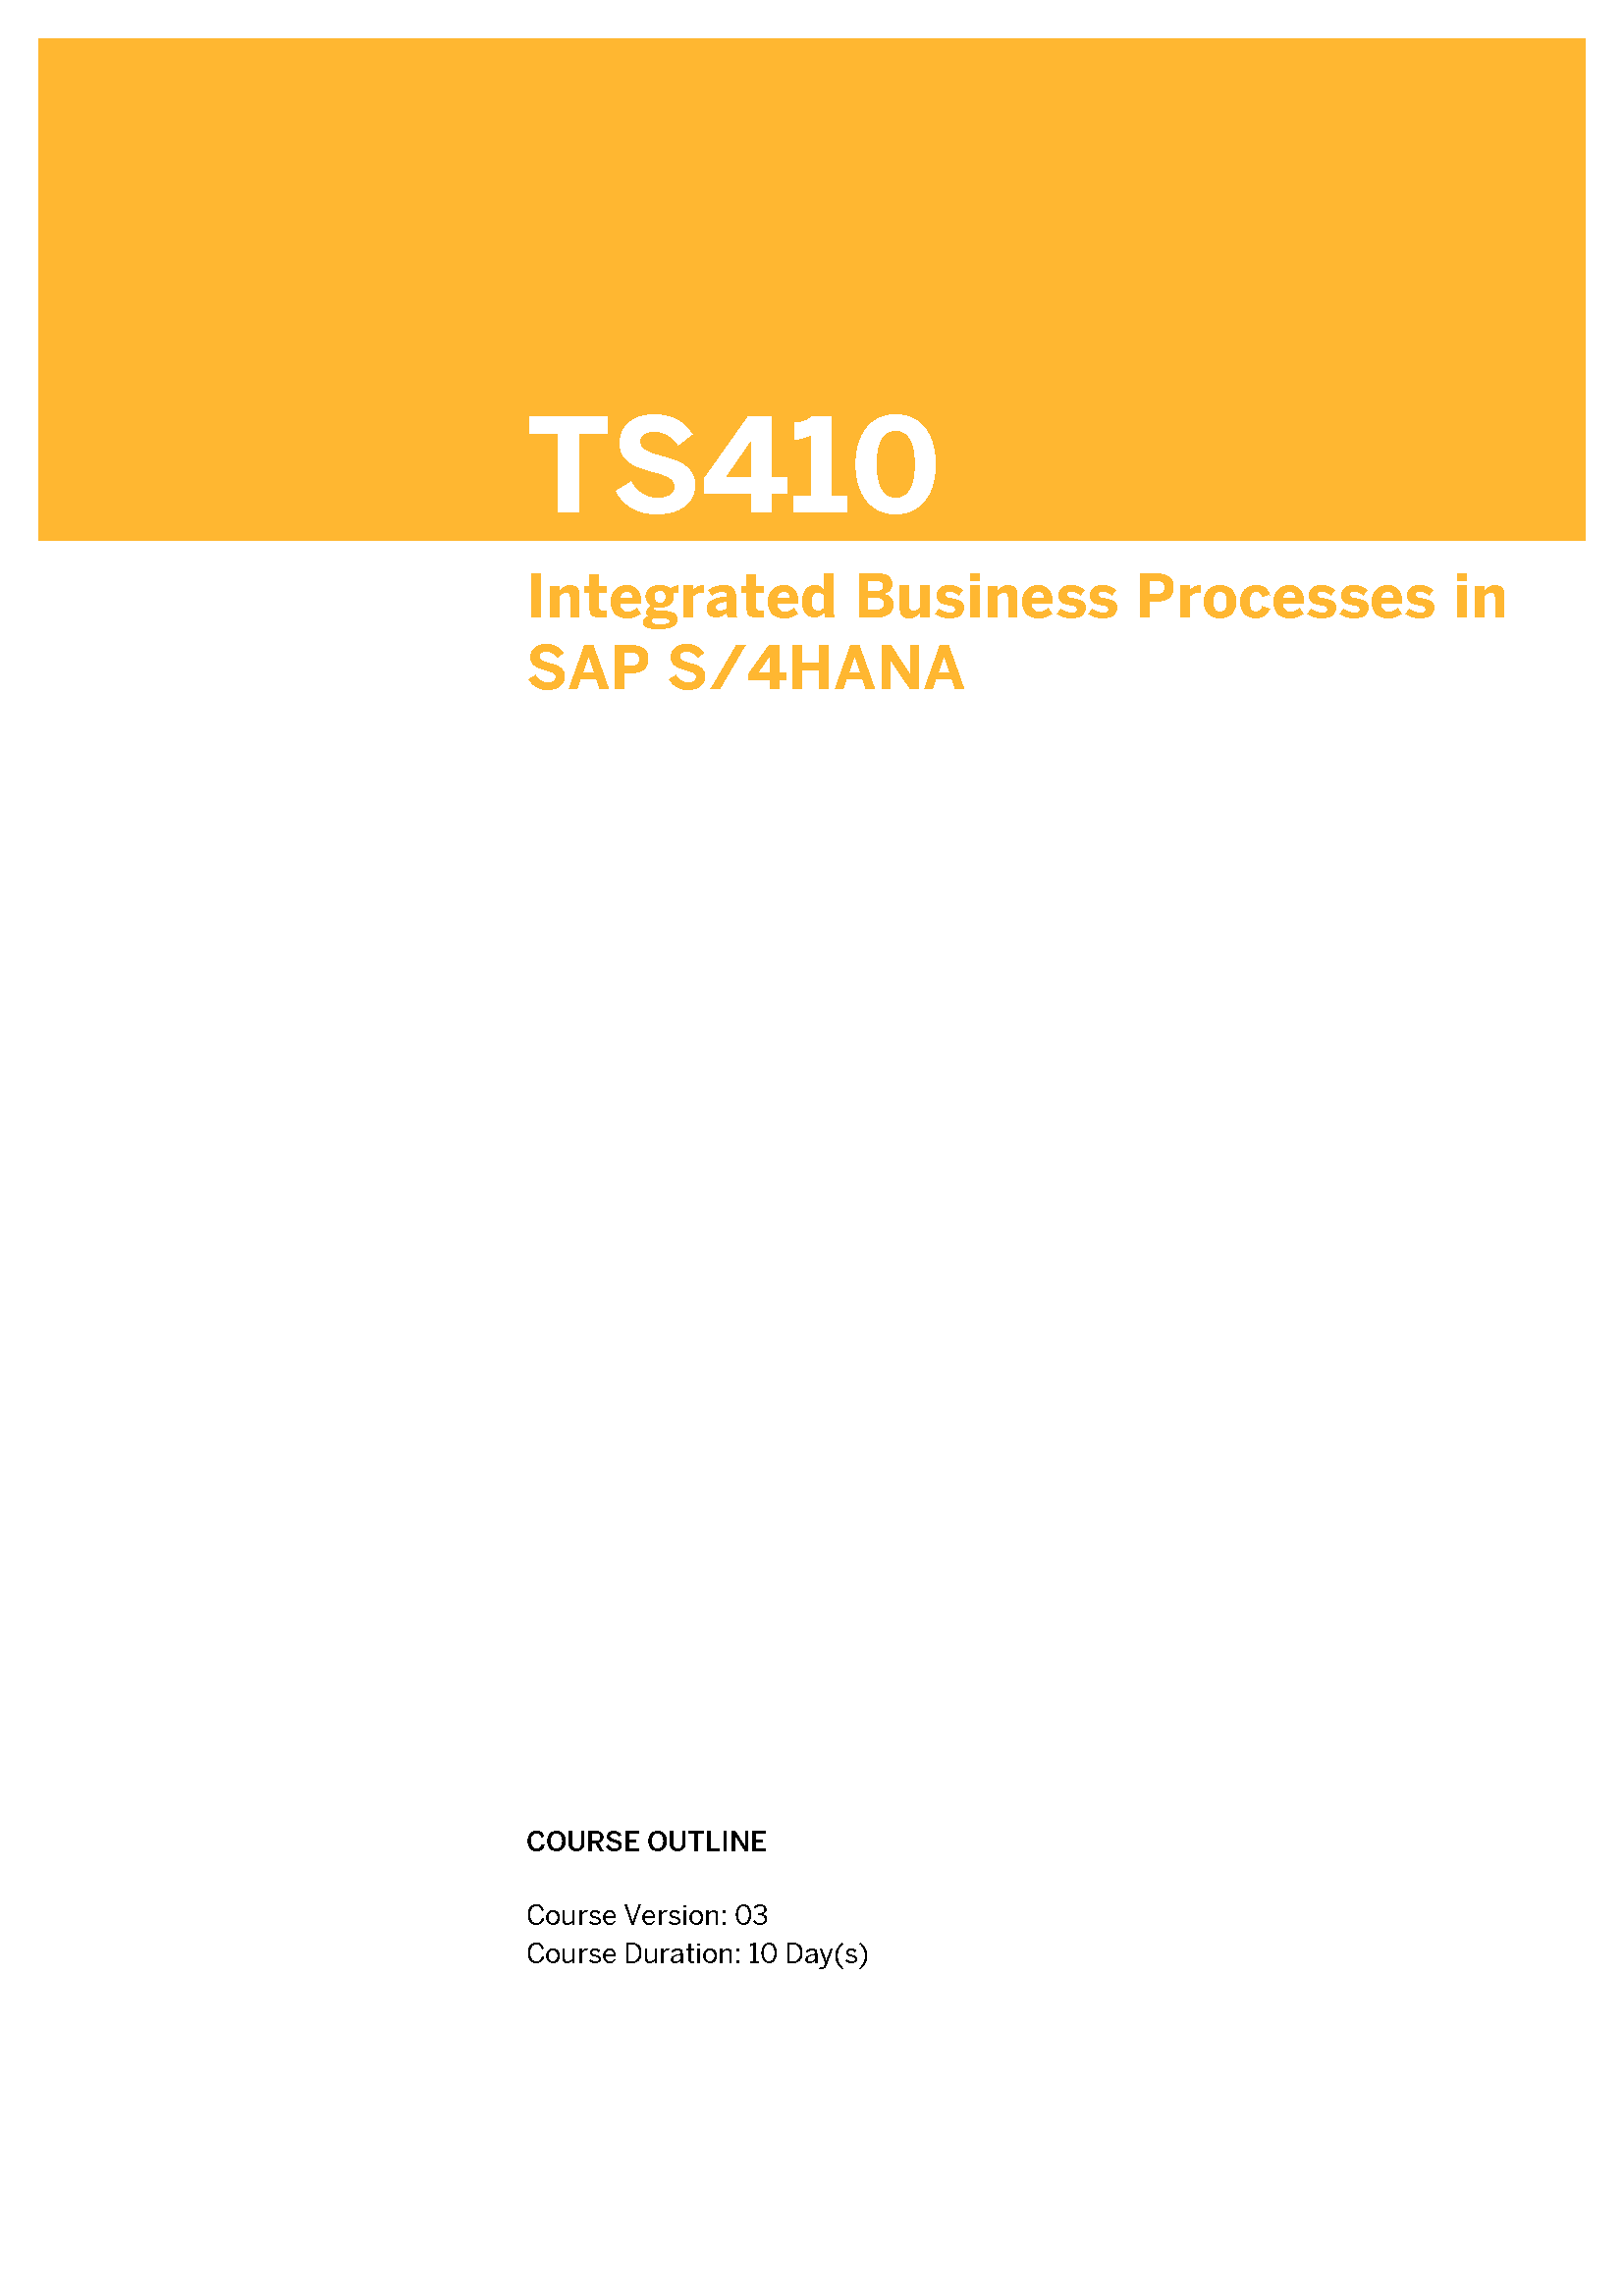 sap enterprise resource planning software ts410 s/4hana certified